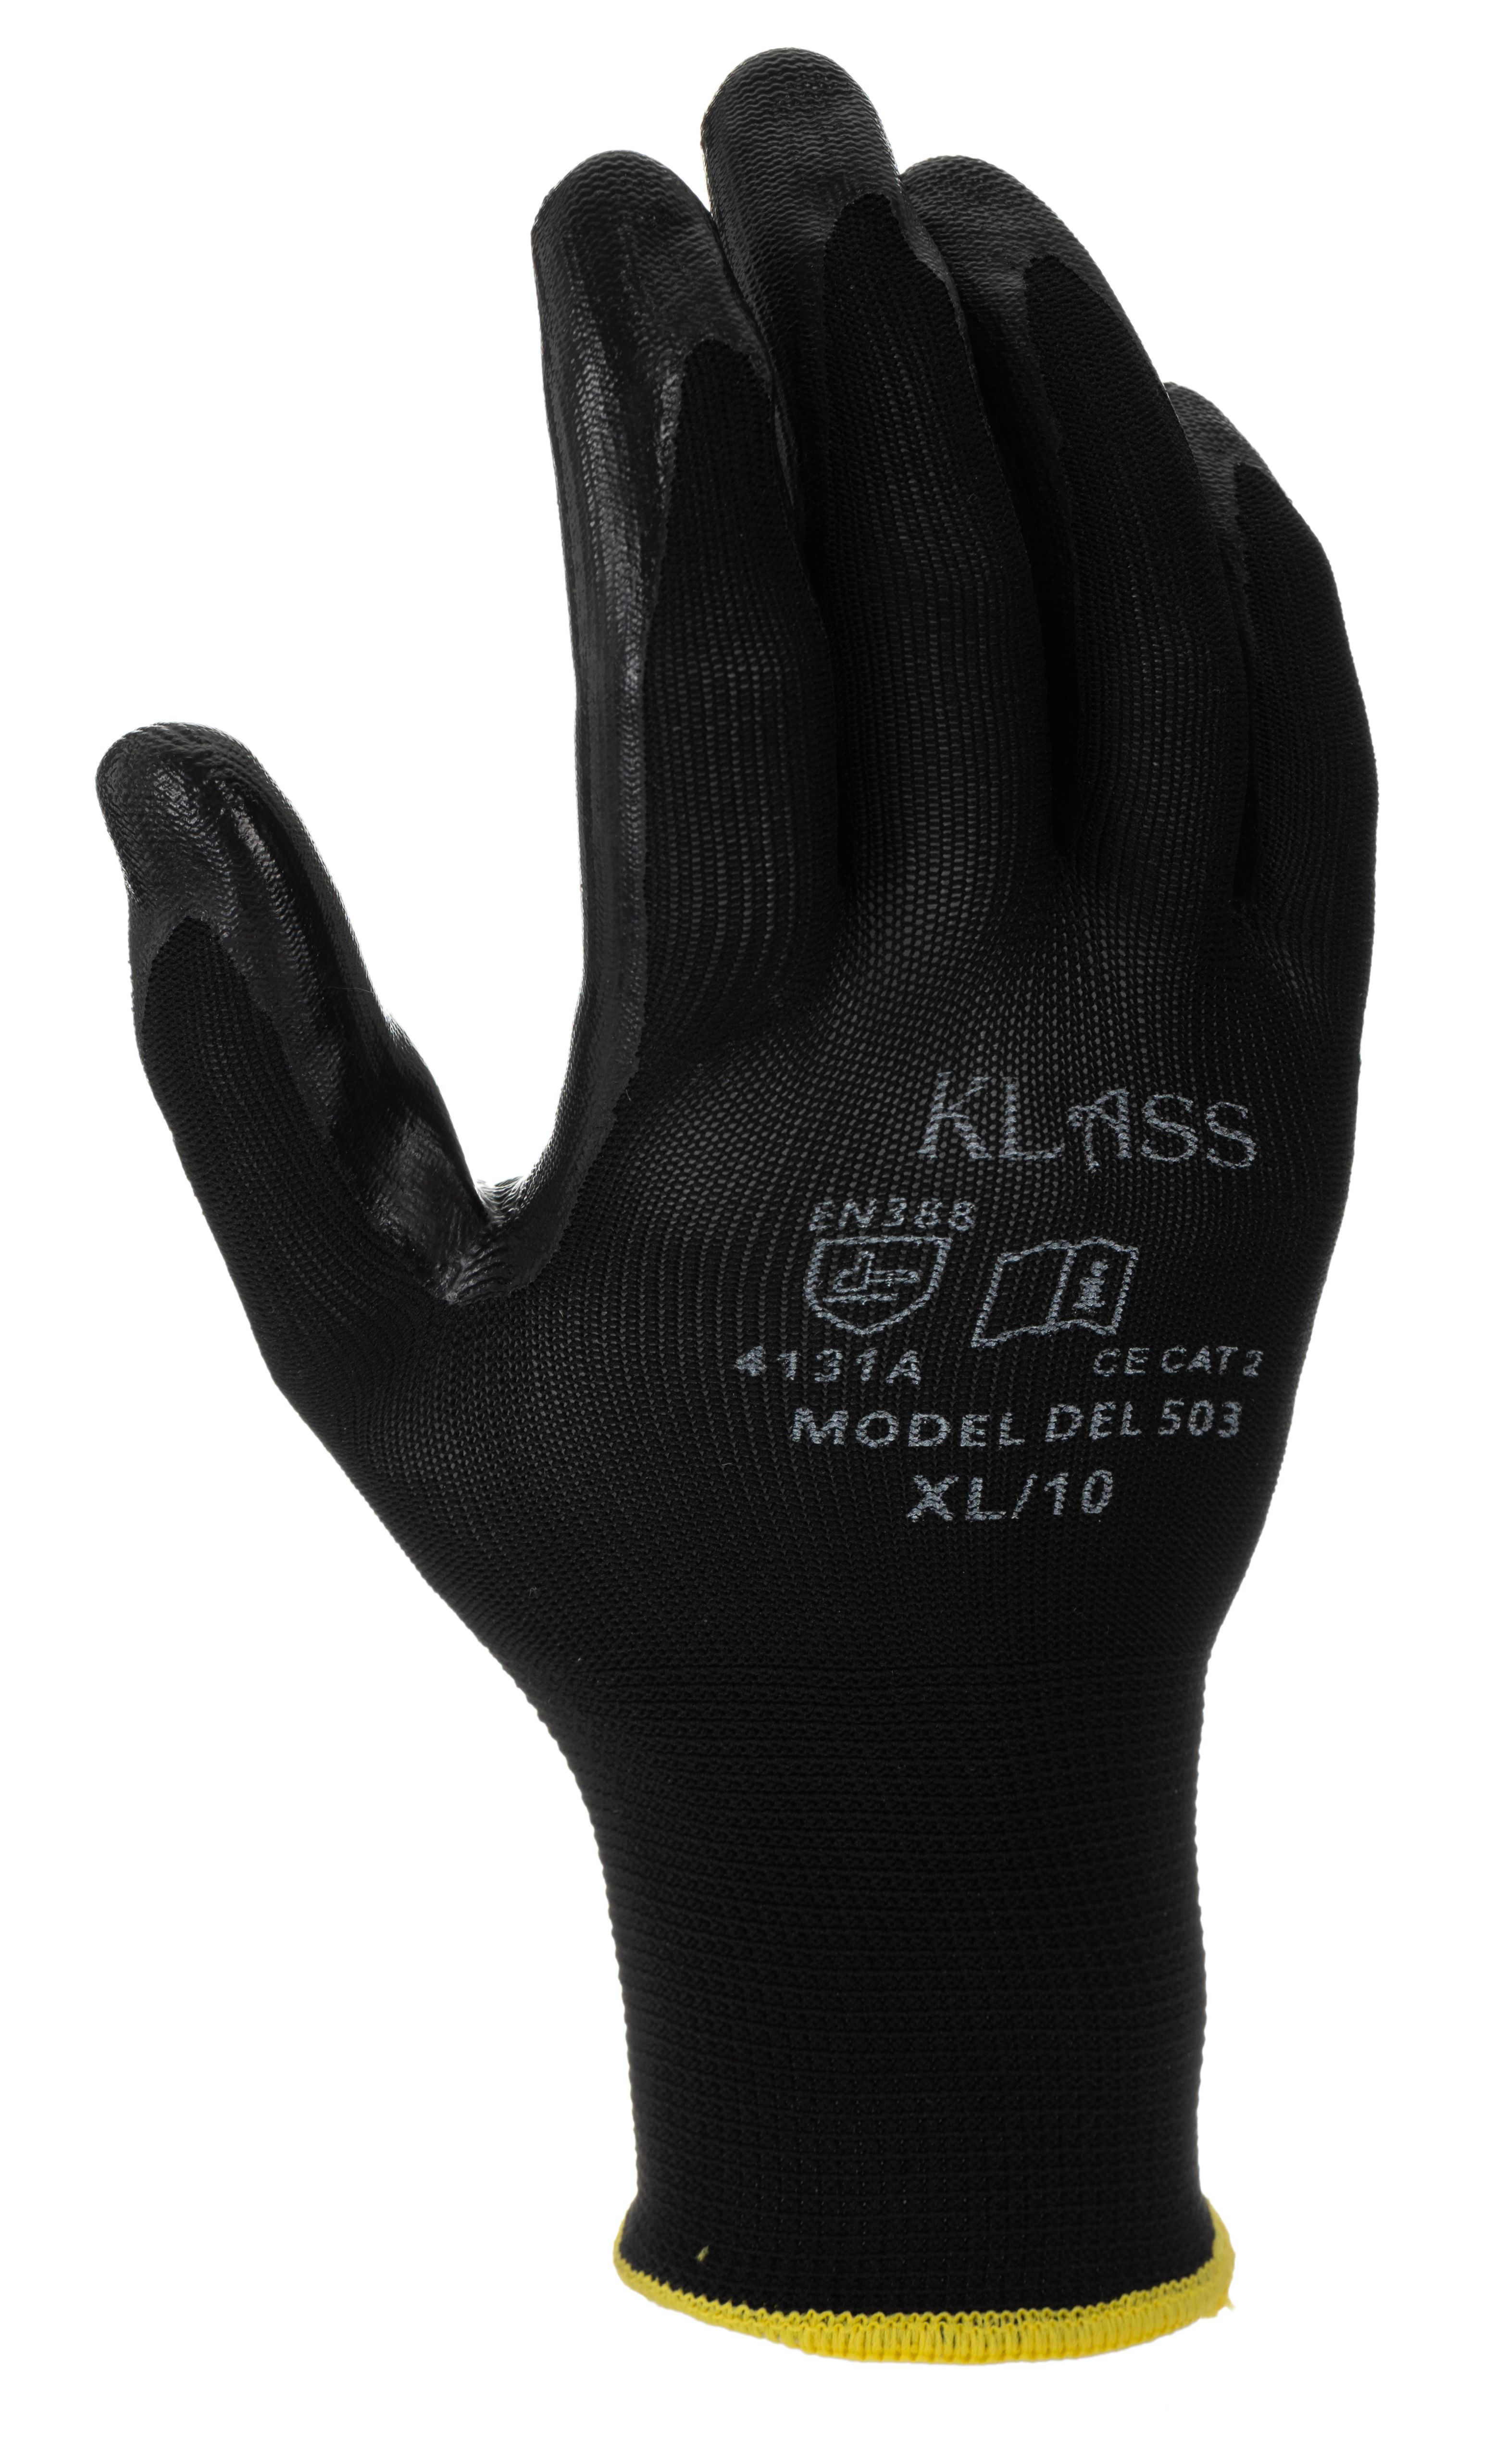 RS PRO Black Polyester General Purpose Work Gloves, Size 10, Large, Nitrile Coating